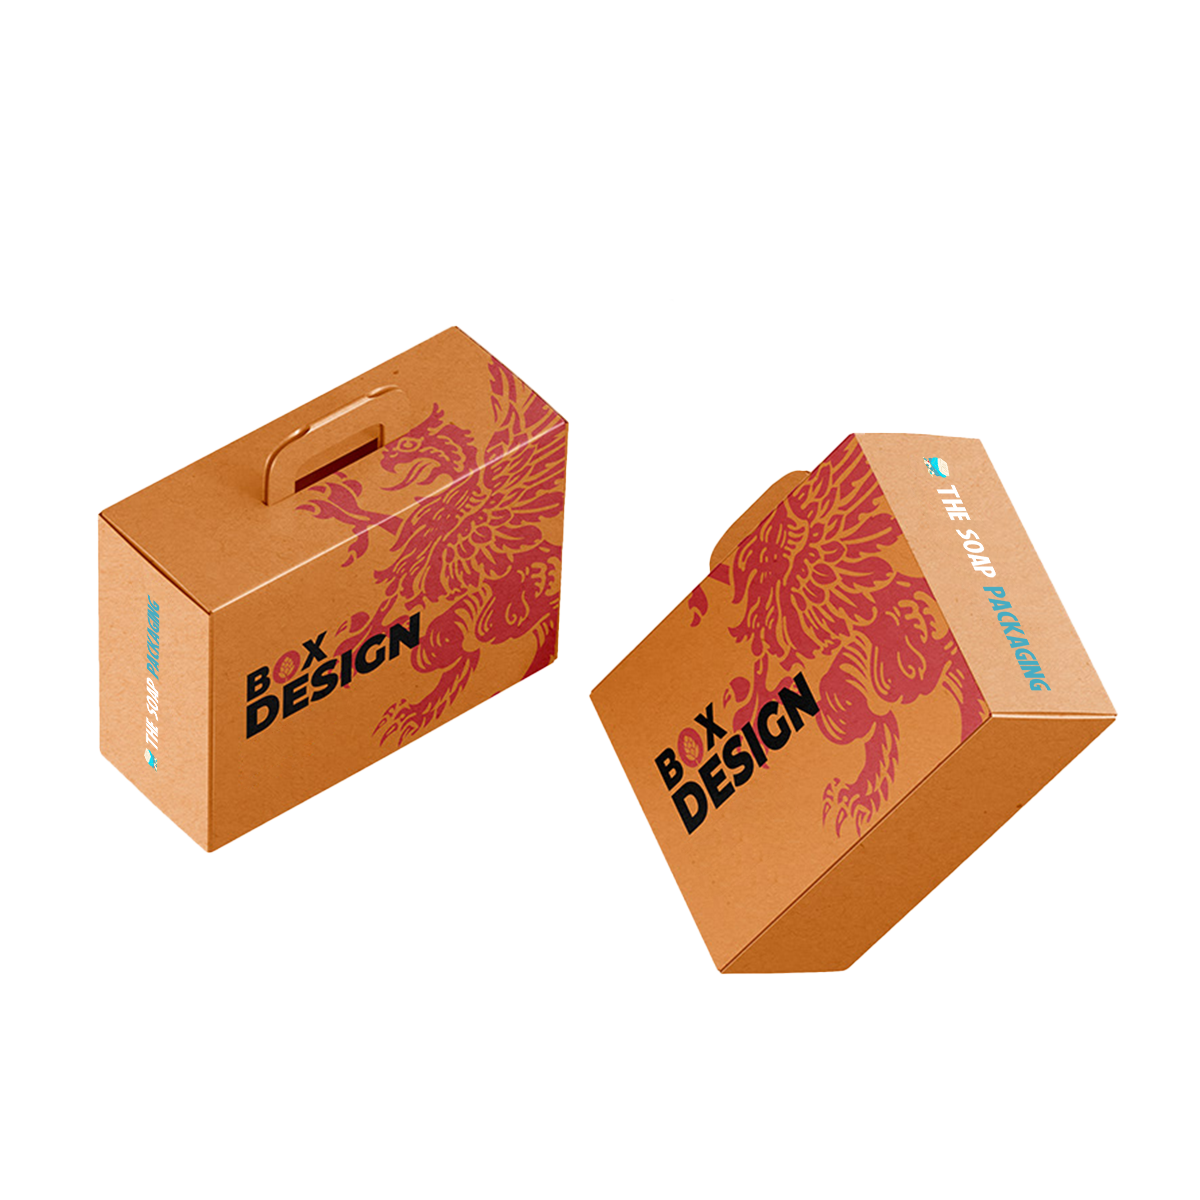 Custom Kraft Soap Boxes, Wholesale Kraft Soap Packaging Boxes